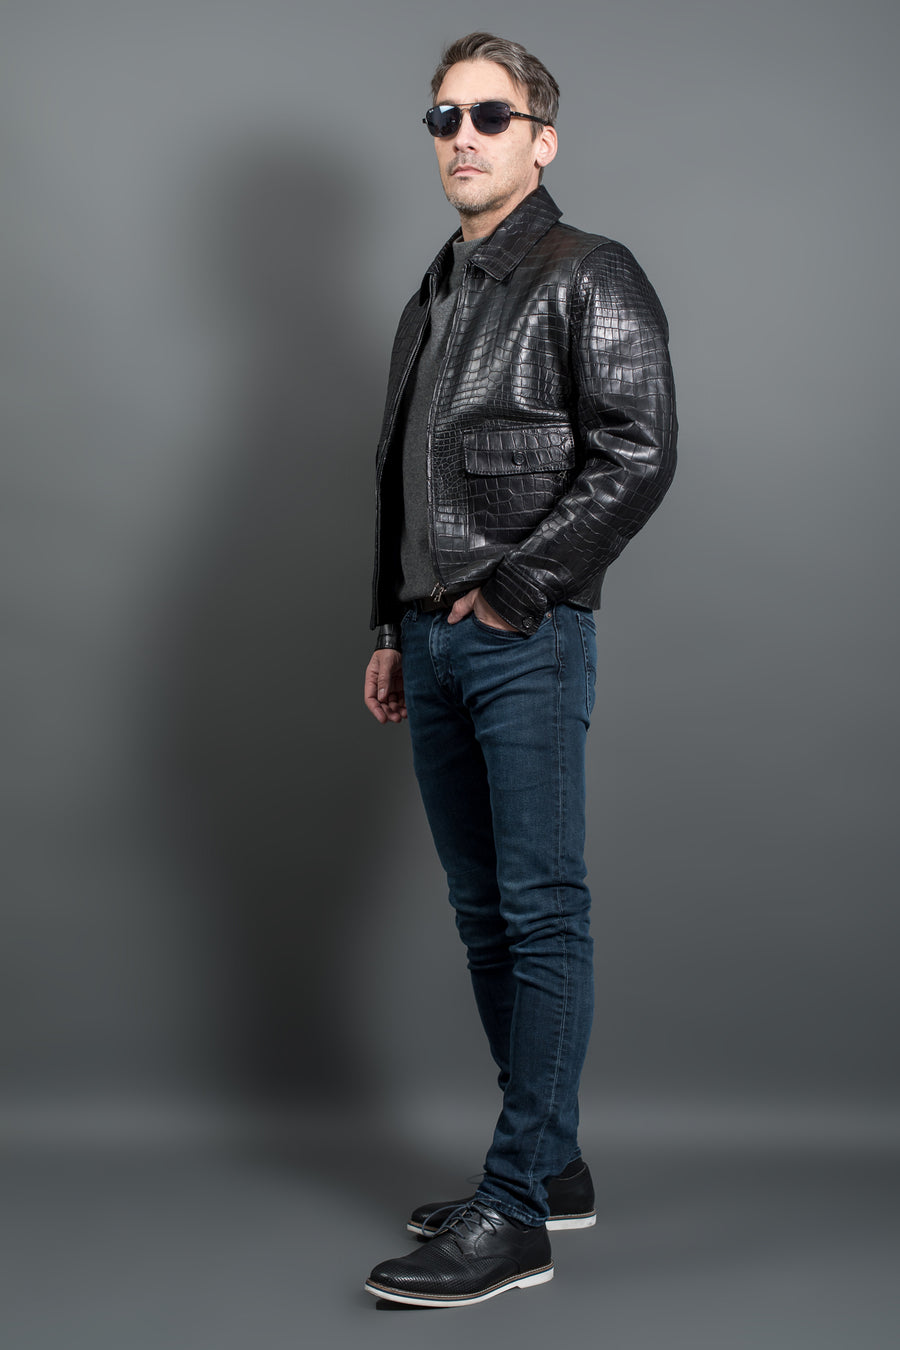 Men's luxury jacket - Philipp Plein biker jacket in crocodile